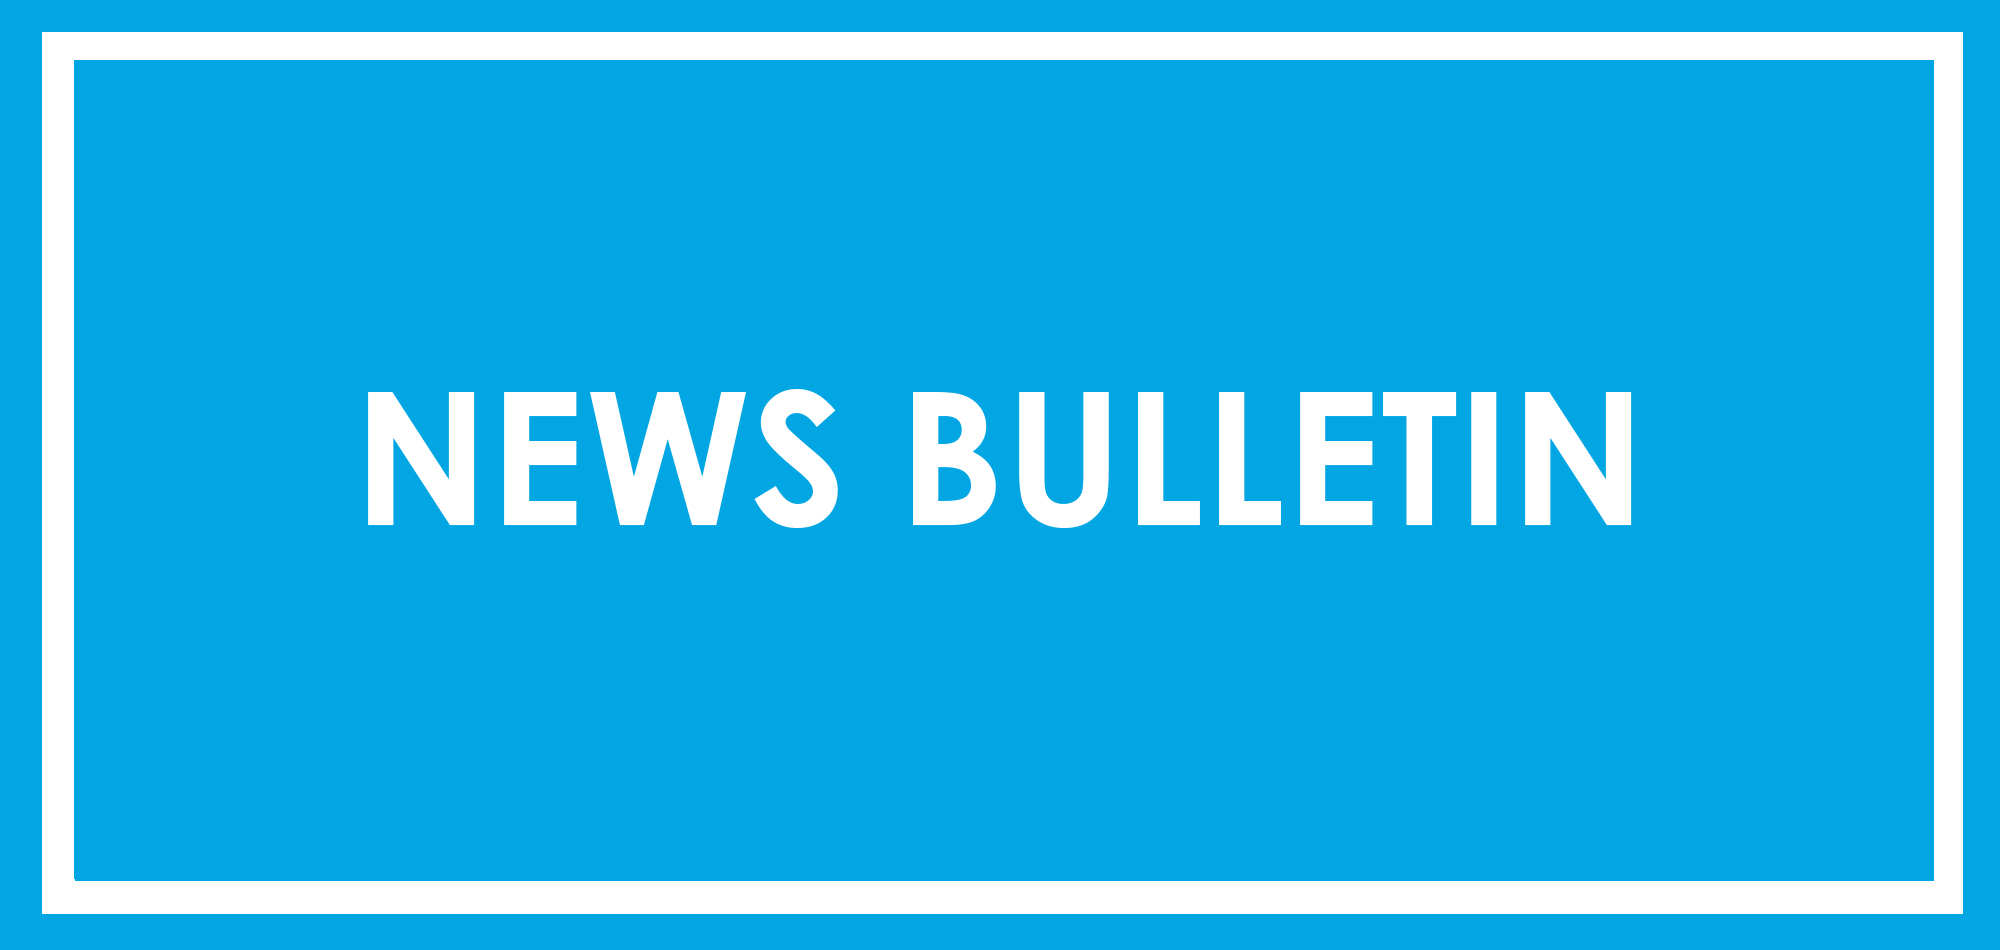 News Bulletin - 25.11.21